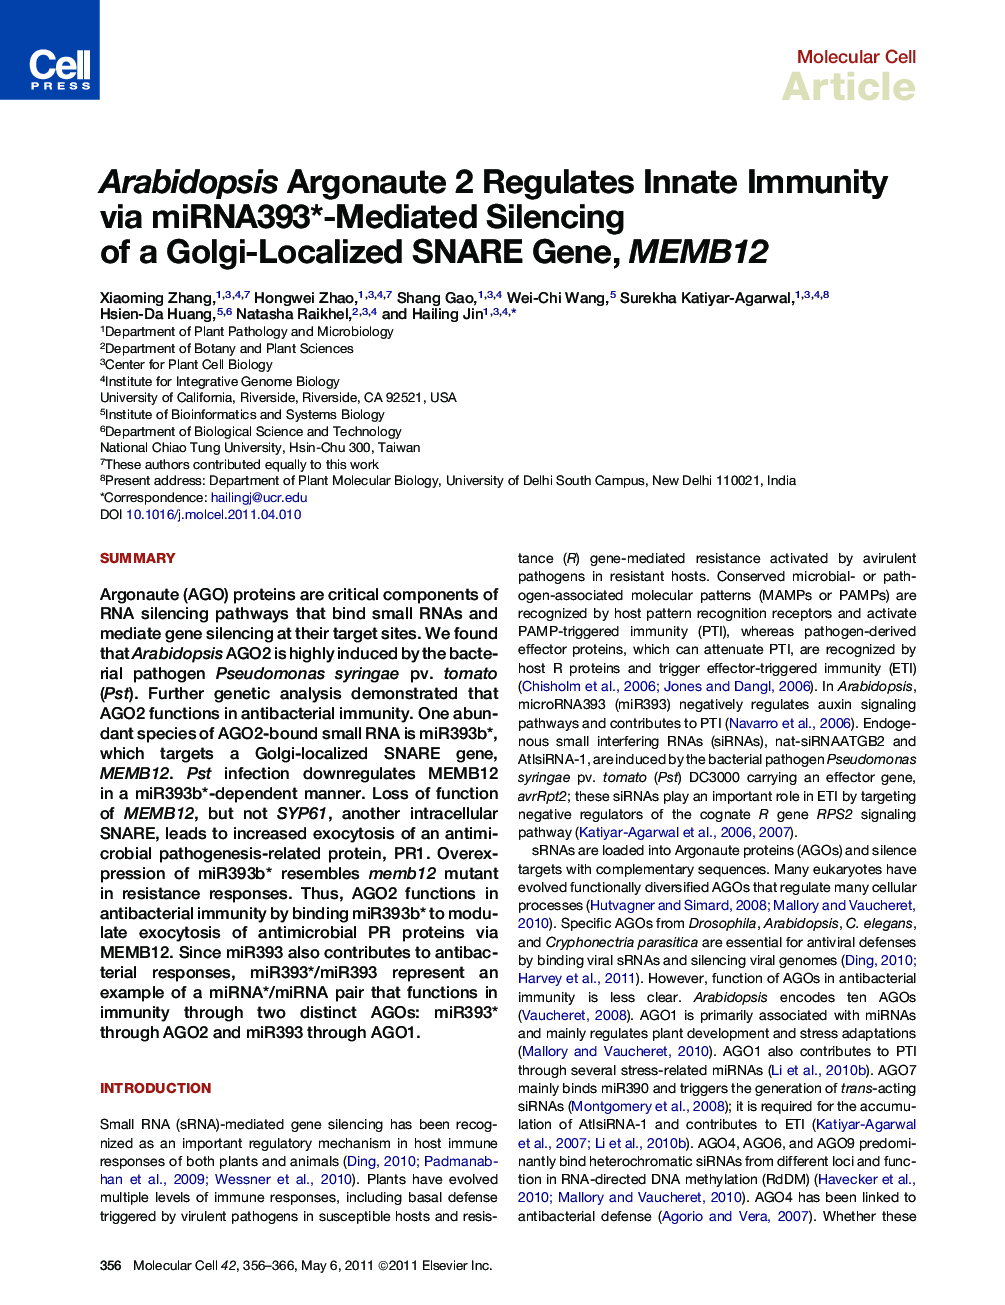 Arabidopsis Argonaute 2 Regulates Innate Immunity via miRNA393∗-Mediated Silencing of a Golgi-Localized SNARE Gene, MEMB12